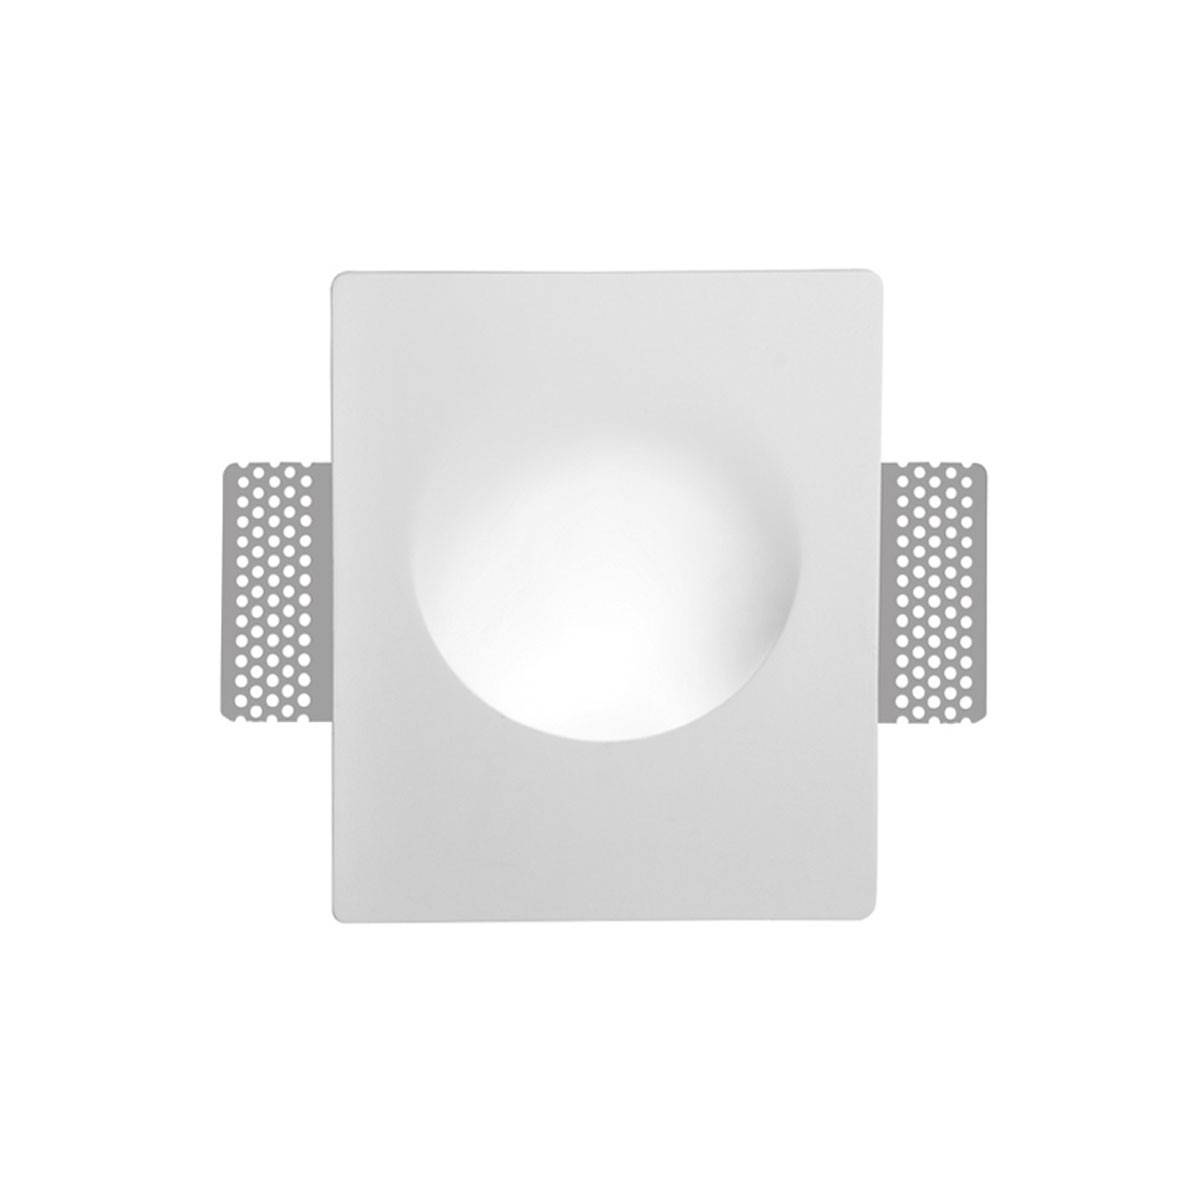 MELON 2" plaster recessed wall light GU10 trimless